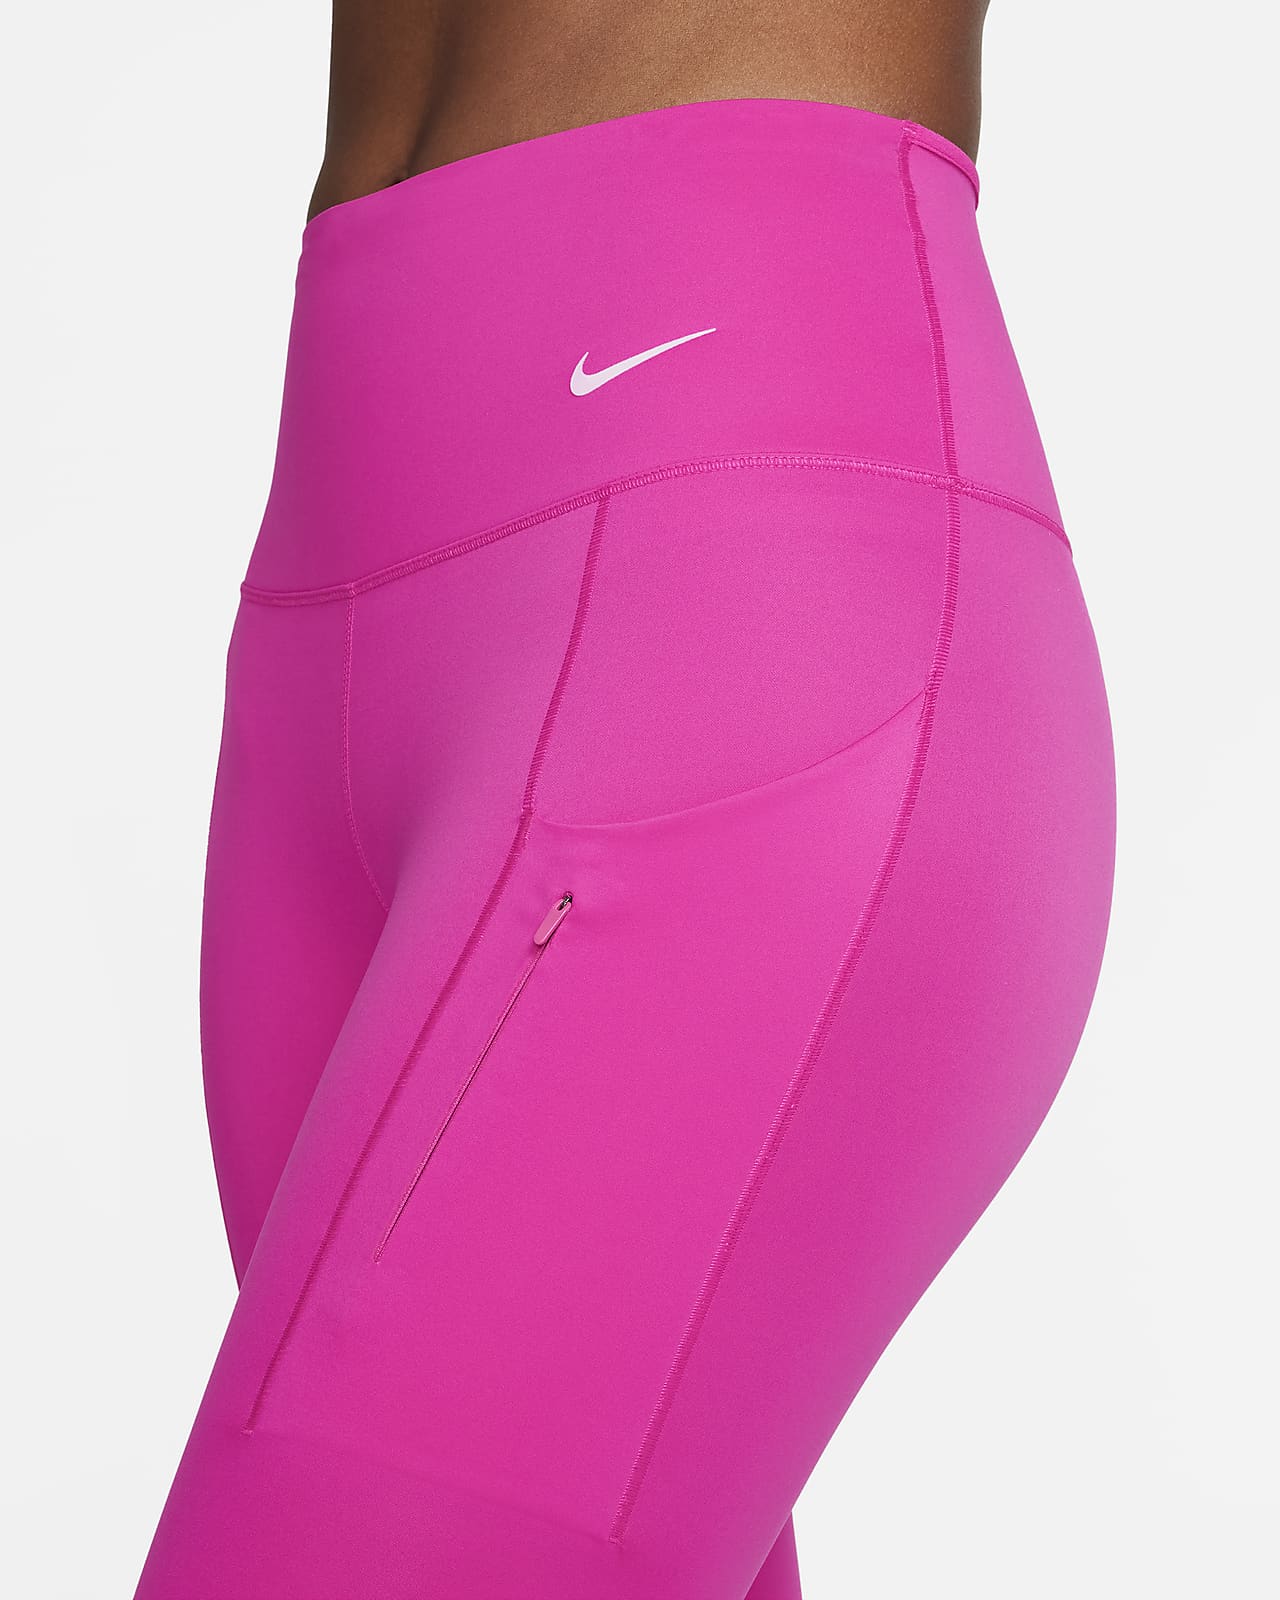 Legging 7/8 woman Nike Dri-FIT Go